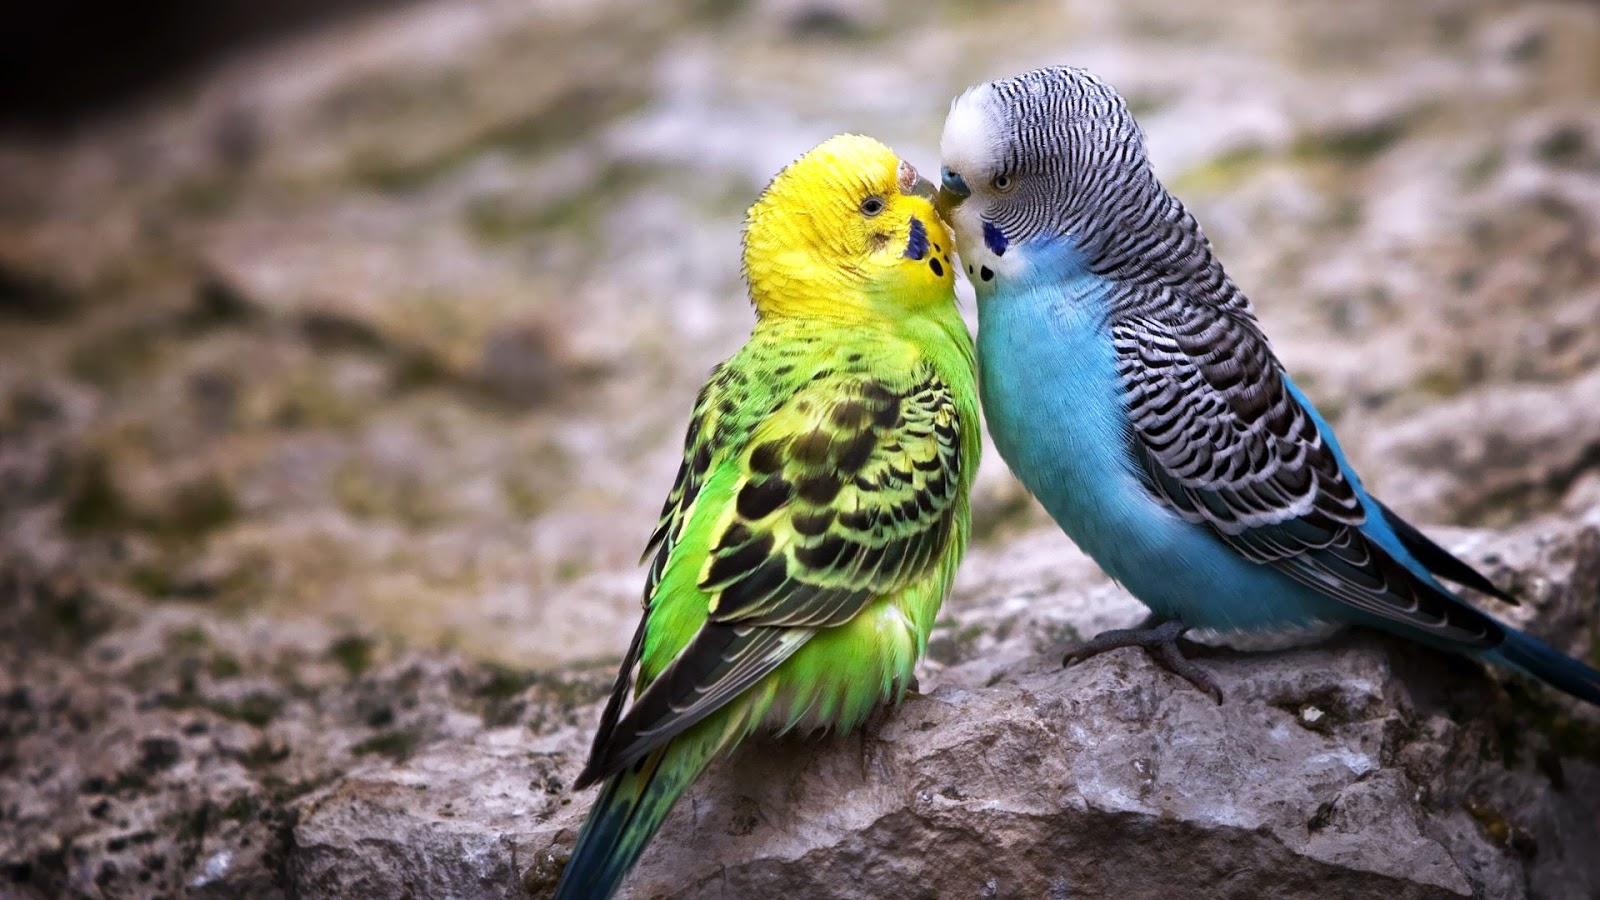 Desktop Images Of Colorful Birds Wallpaper - Animals Love Images Hd -  1600x900 Wallpaper 